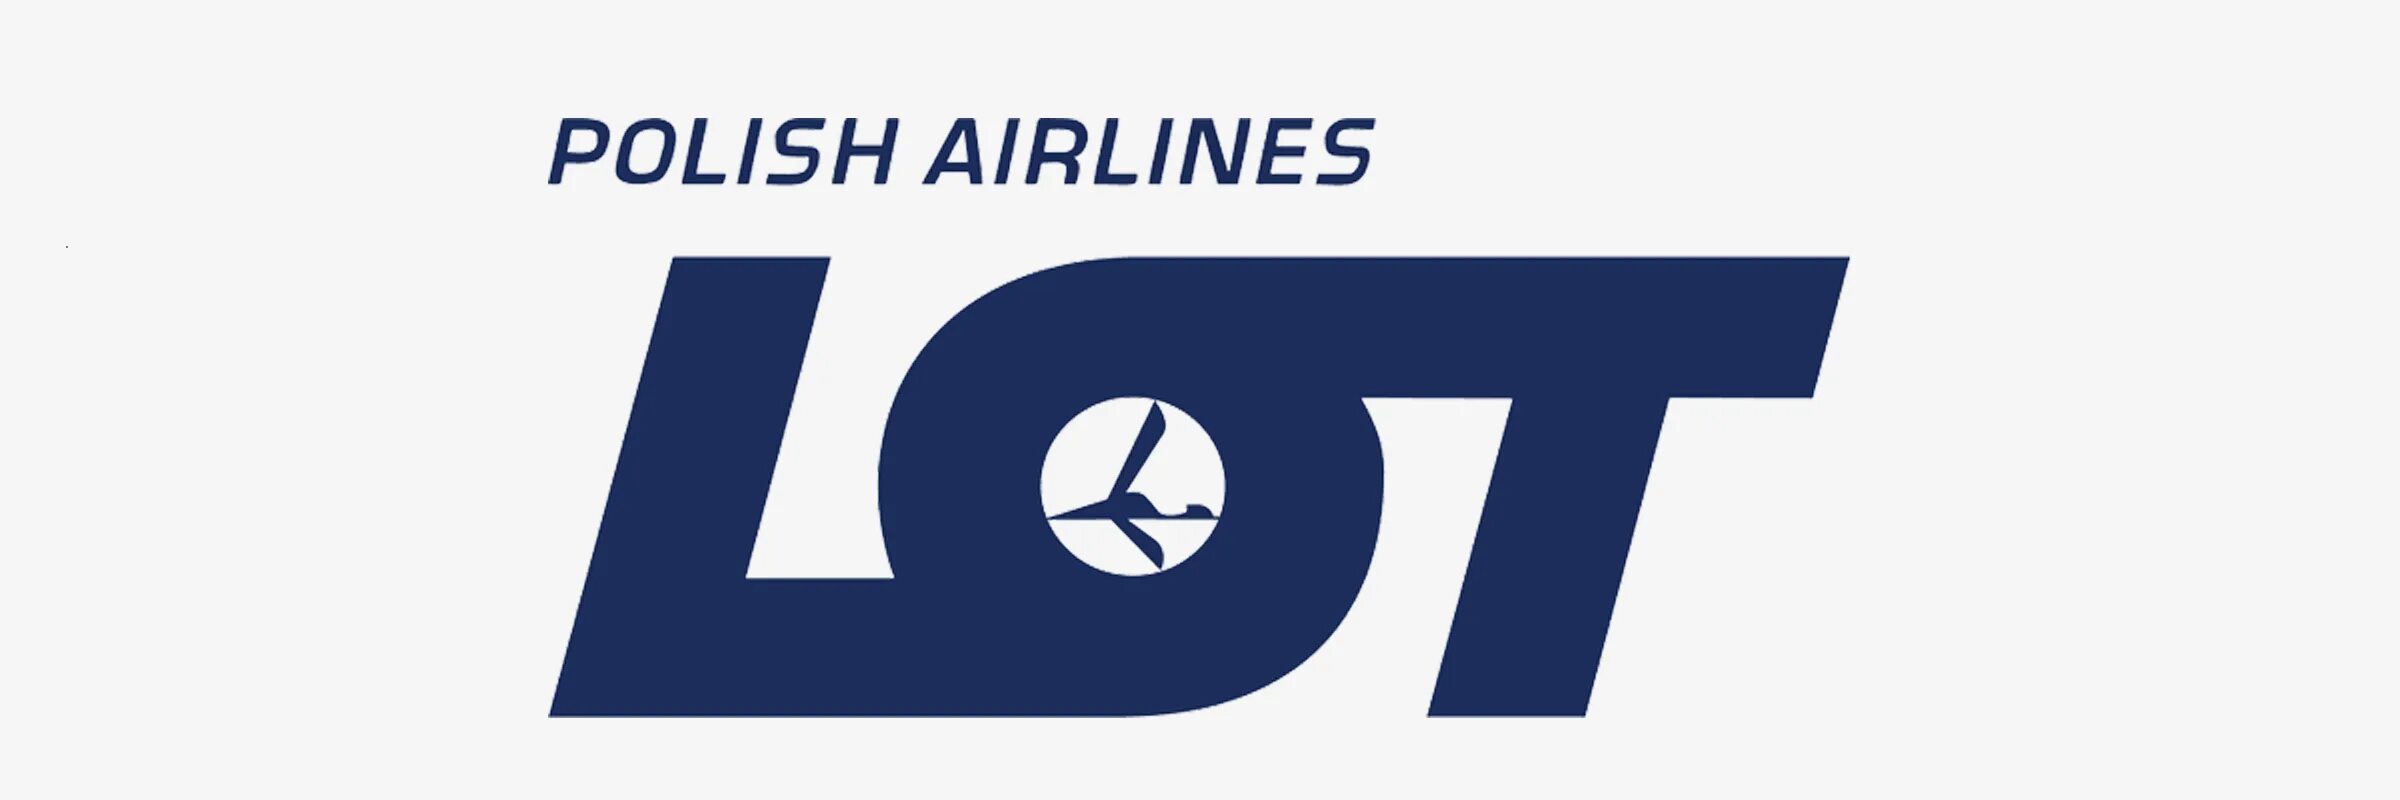 Lot Airlines. Lot Polish Airlines. Lot авиакомпания билет. ИАТА авиакомпаний. Lot polish